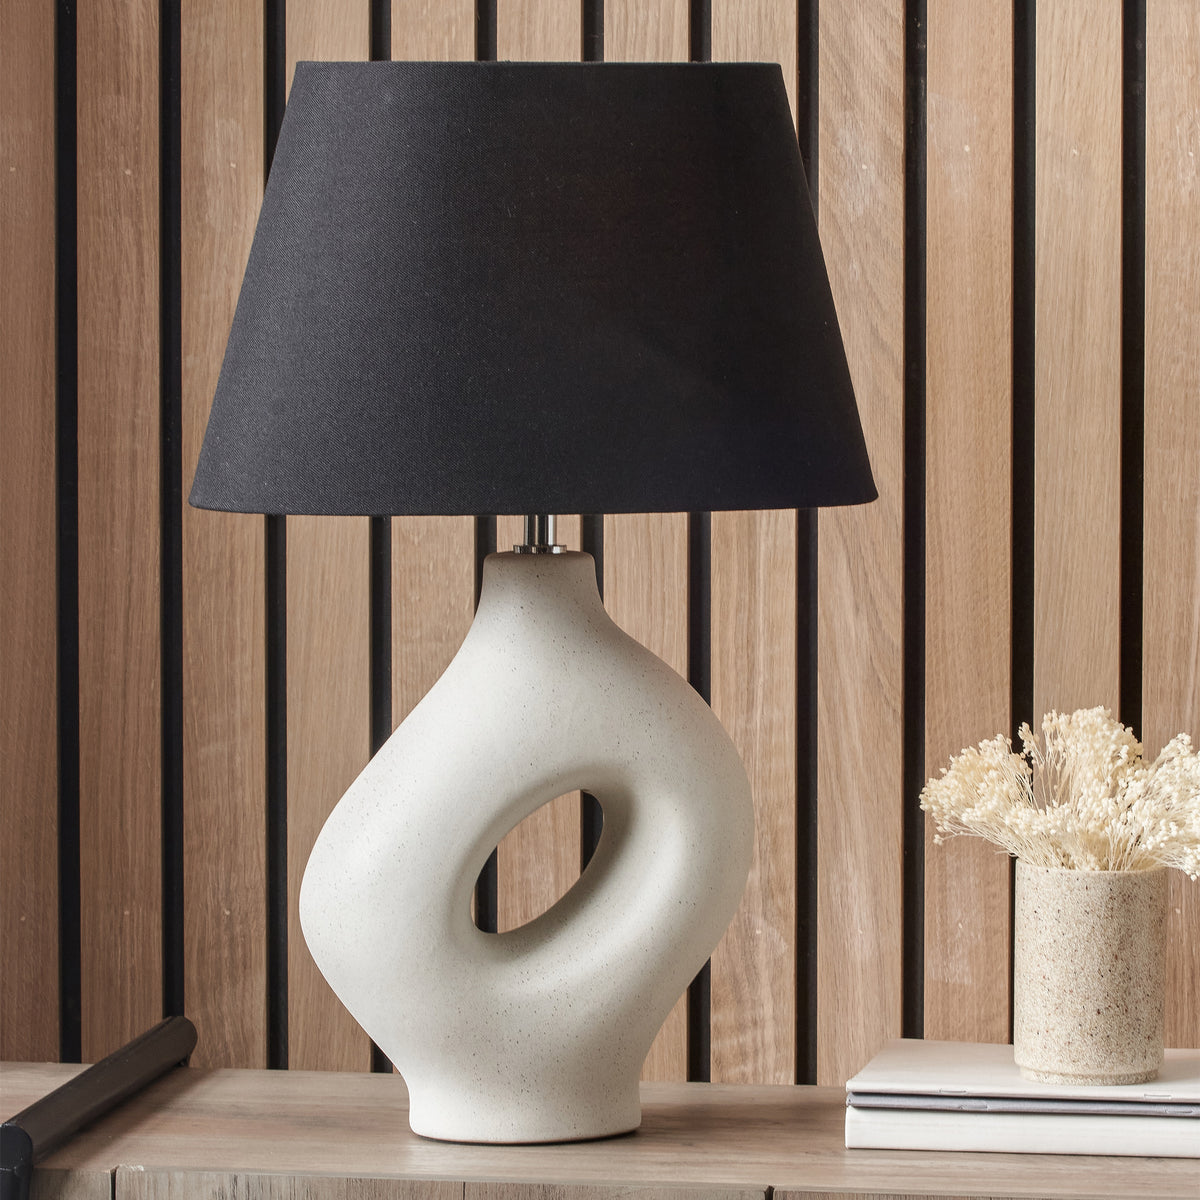 Ulla Monochrome Organic Ceramic Table Lamp for living room or bedroom